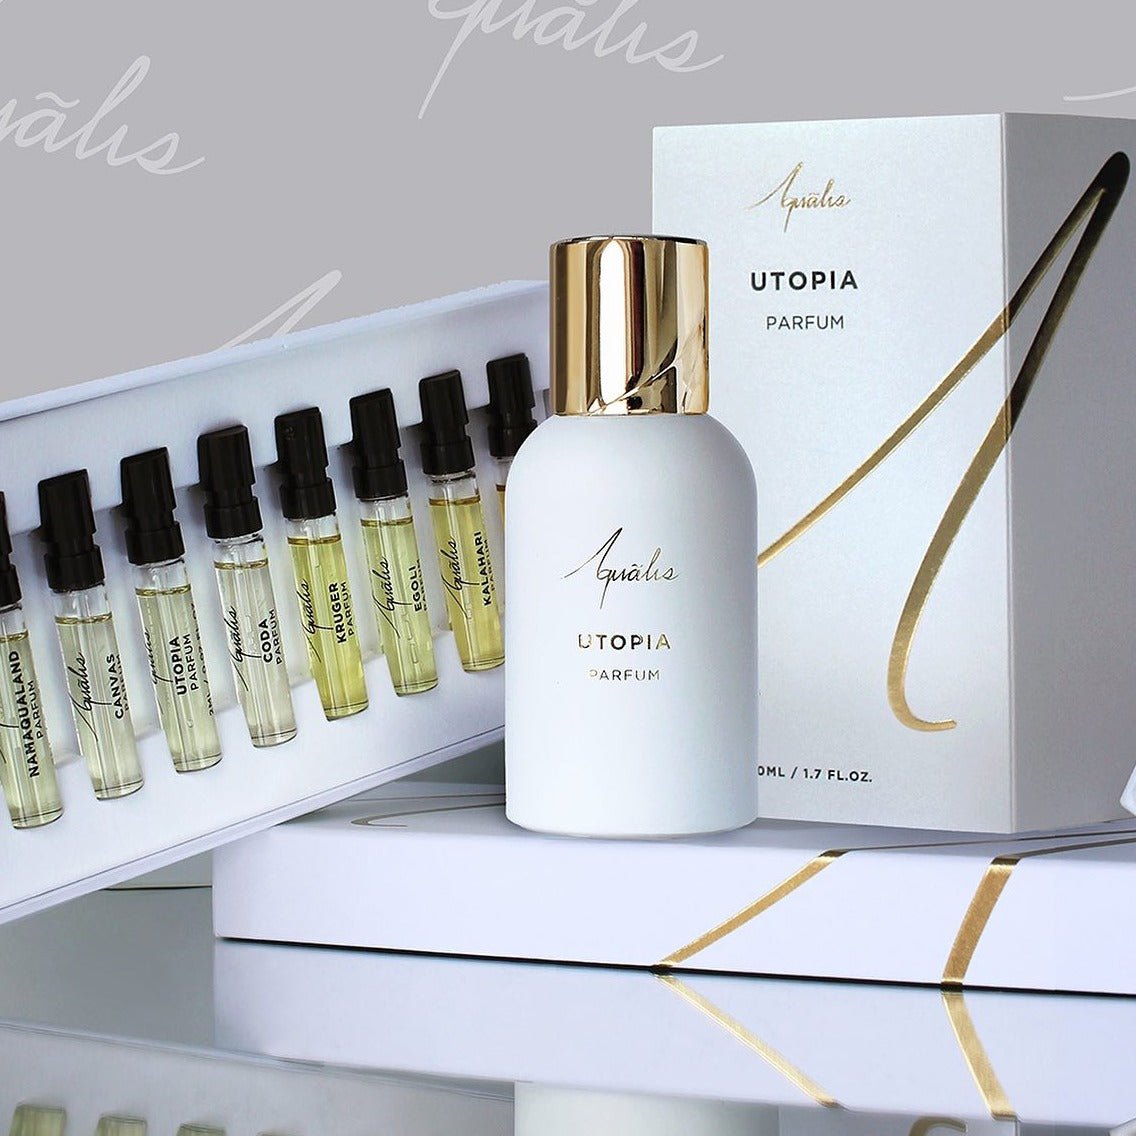 Aqualis Utopia Parfum | My Perfume Shop Australia